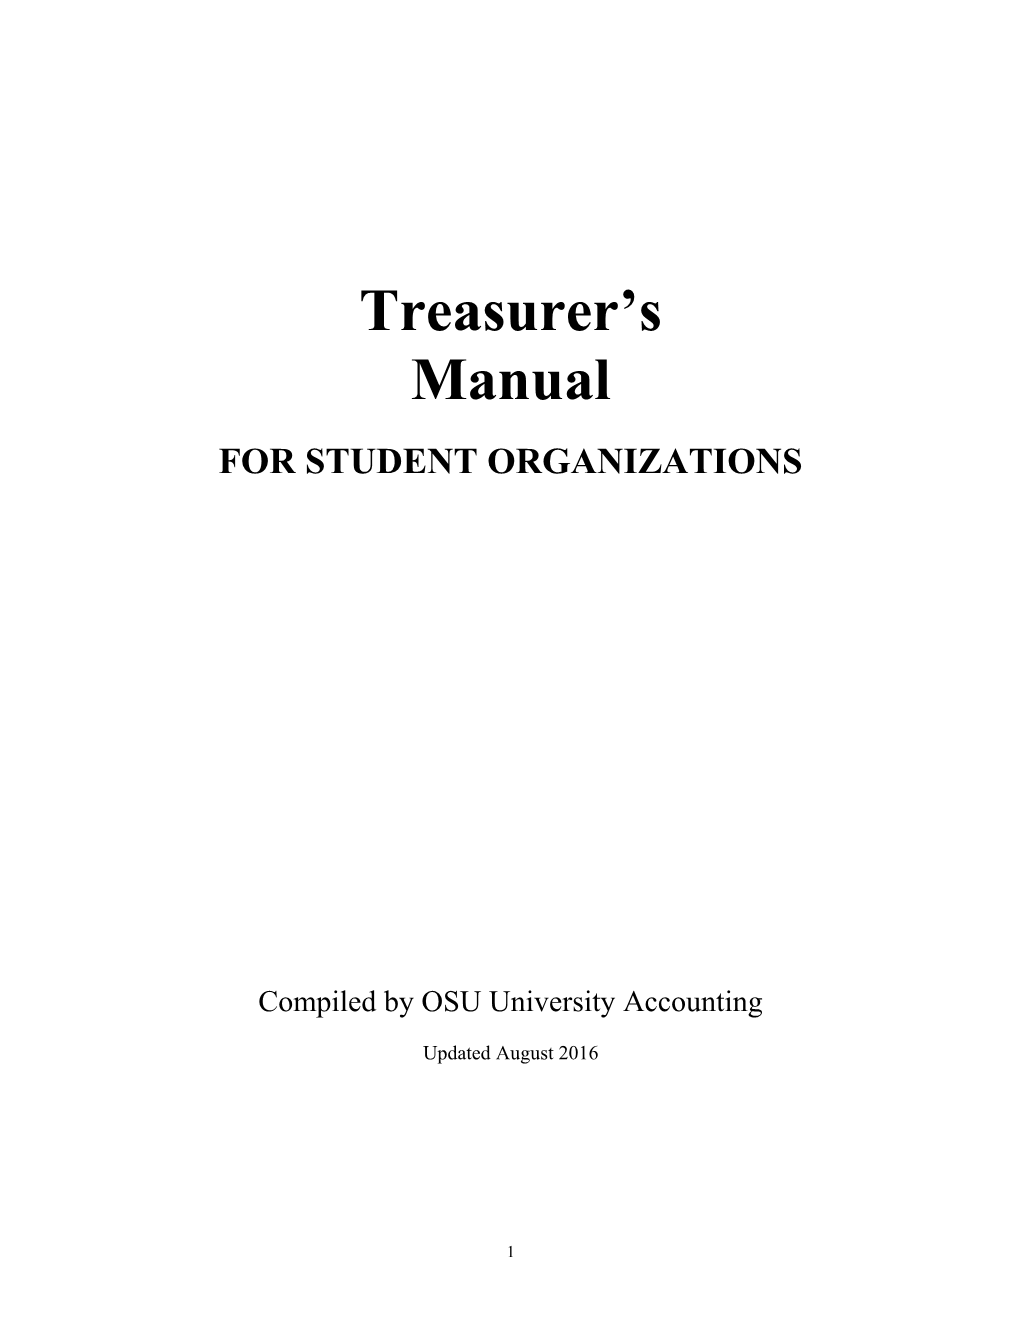 Student Organization Treasurer's Manual